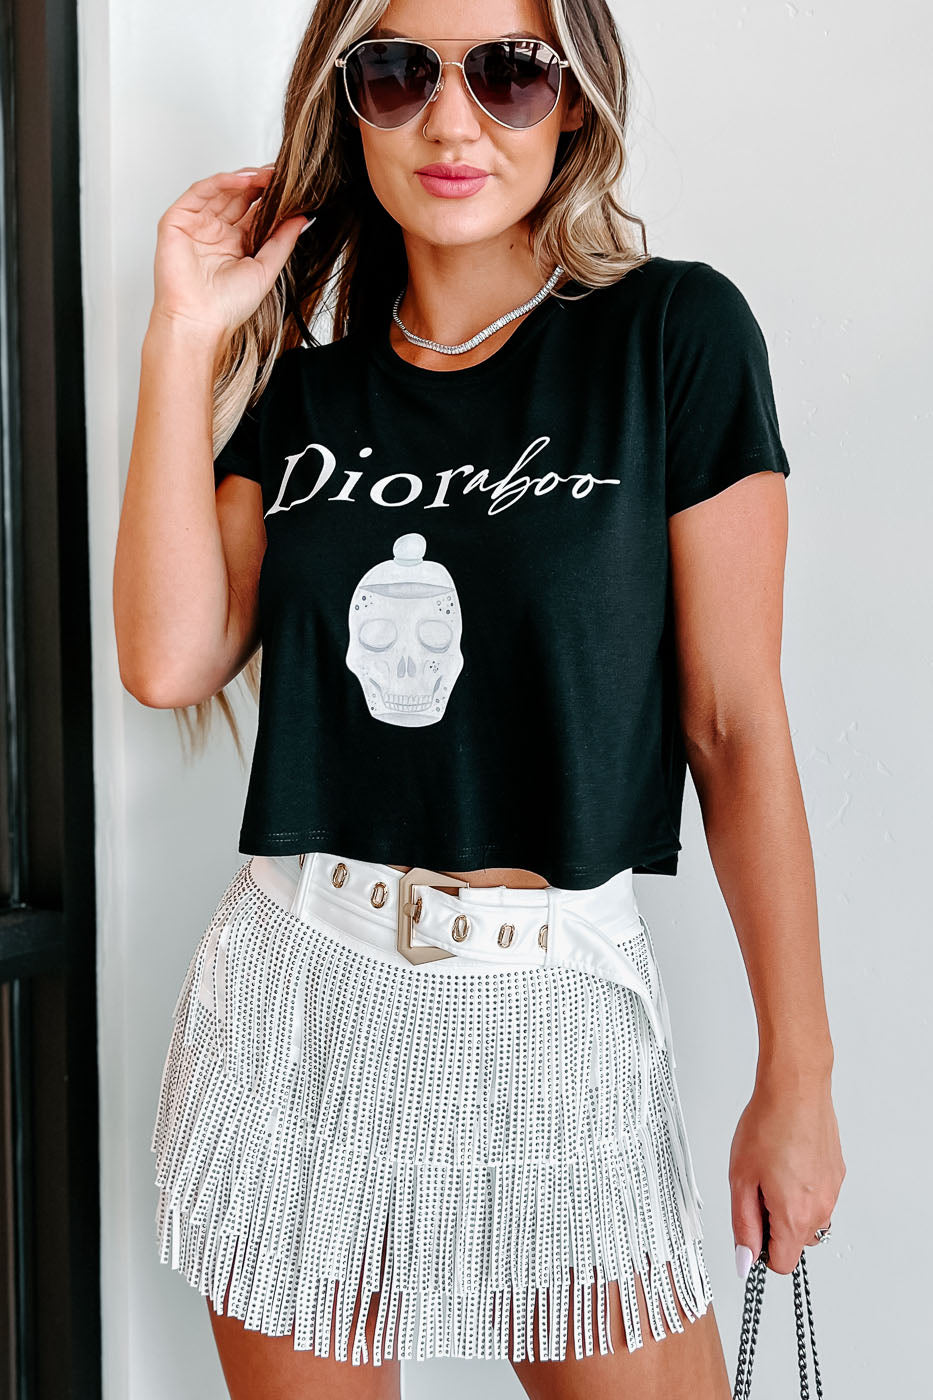 "Dioraboo" Graphic - Multiple Shirt Options (Black/White Text) - Print On Demand - NanaMacs